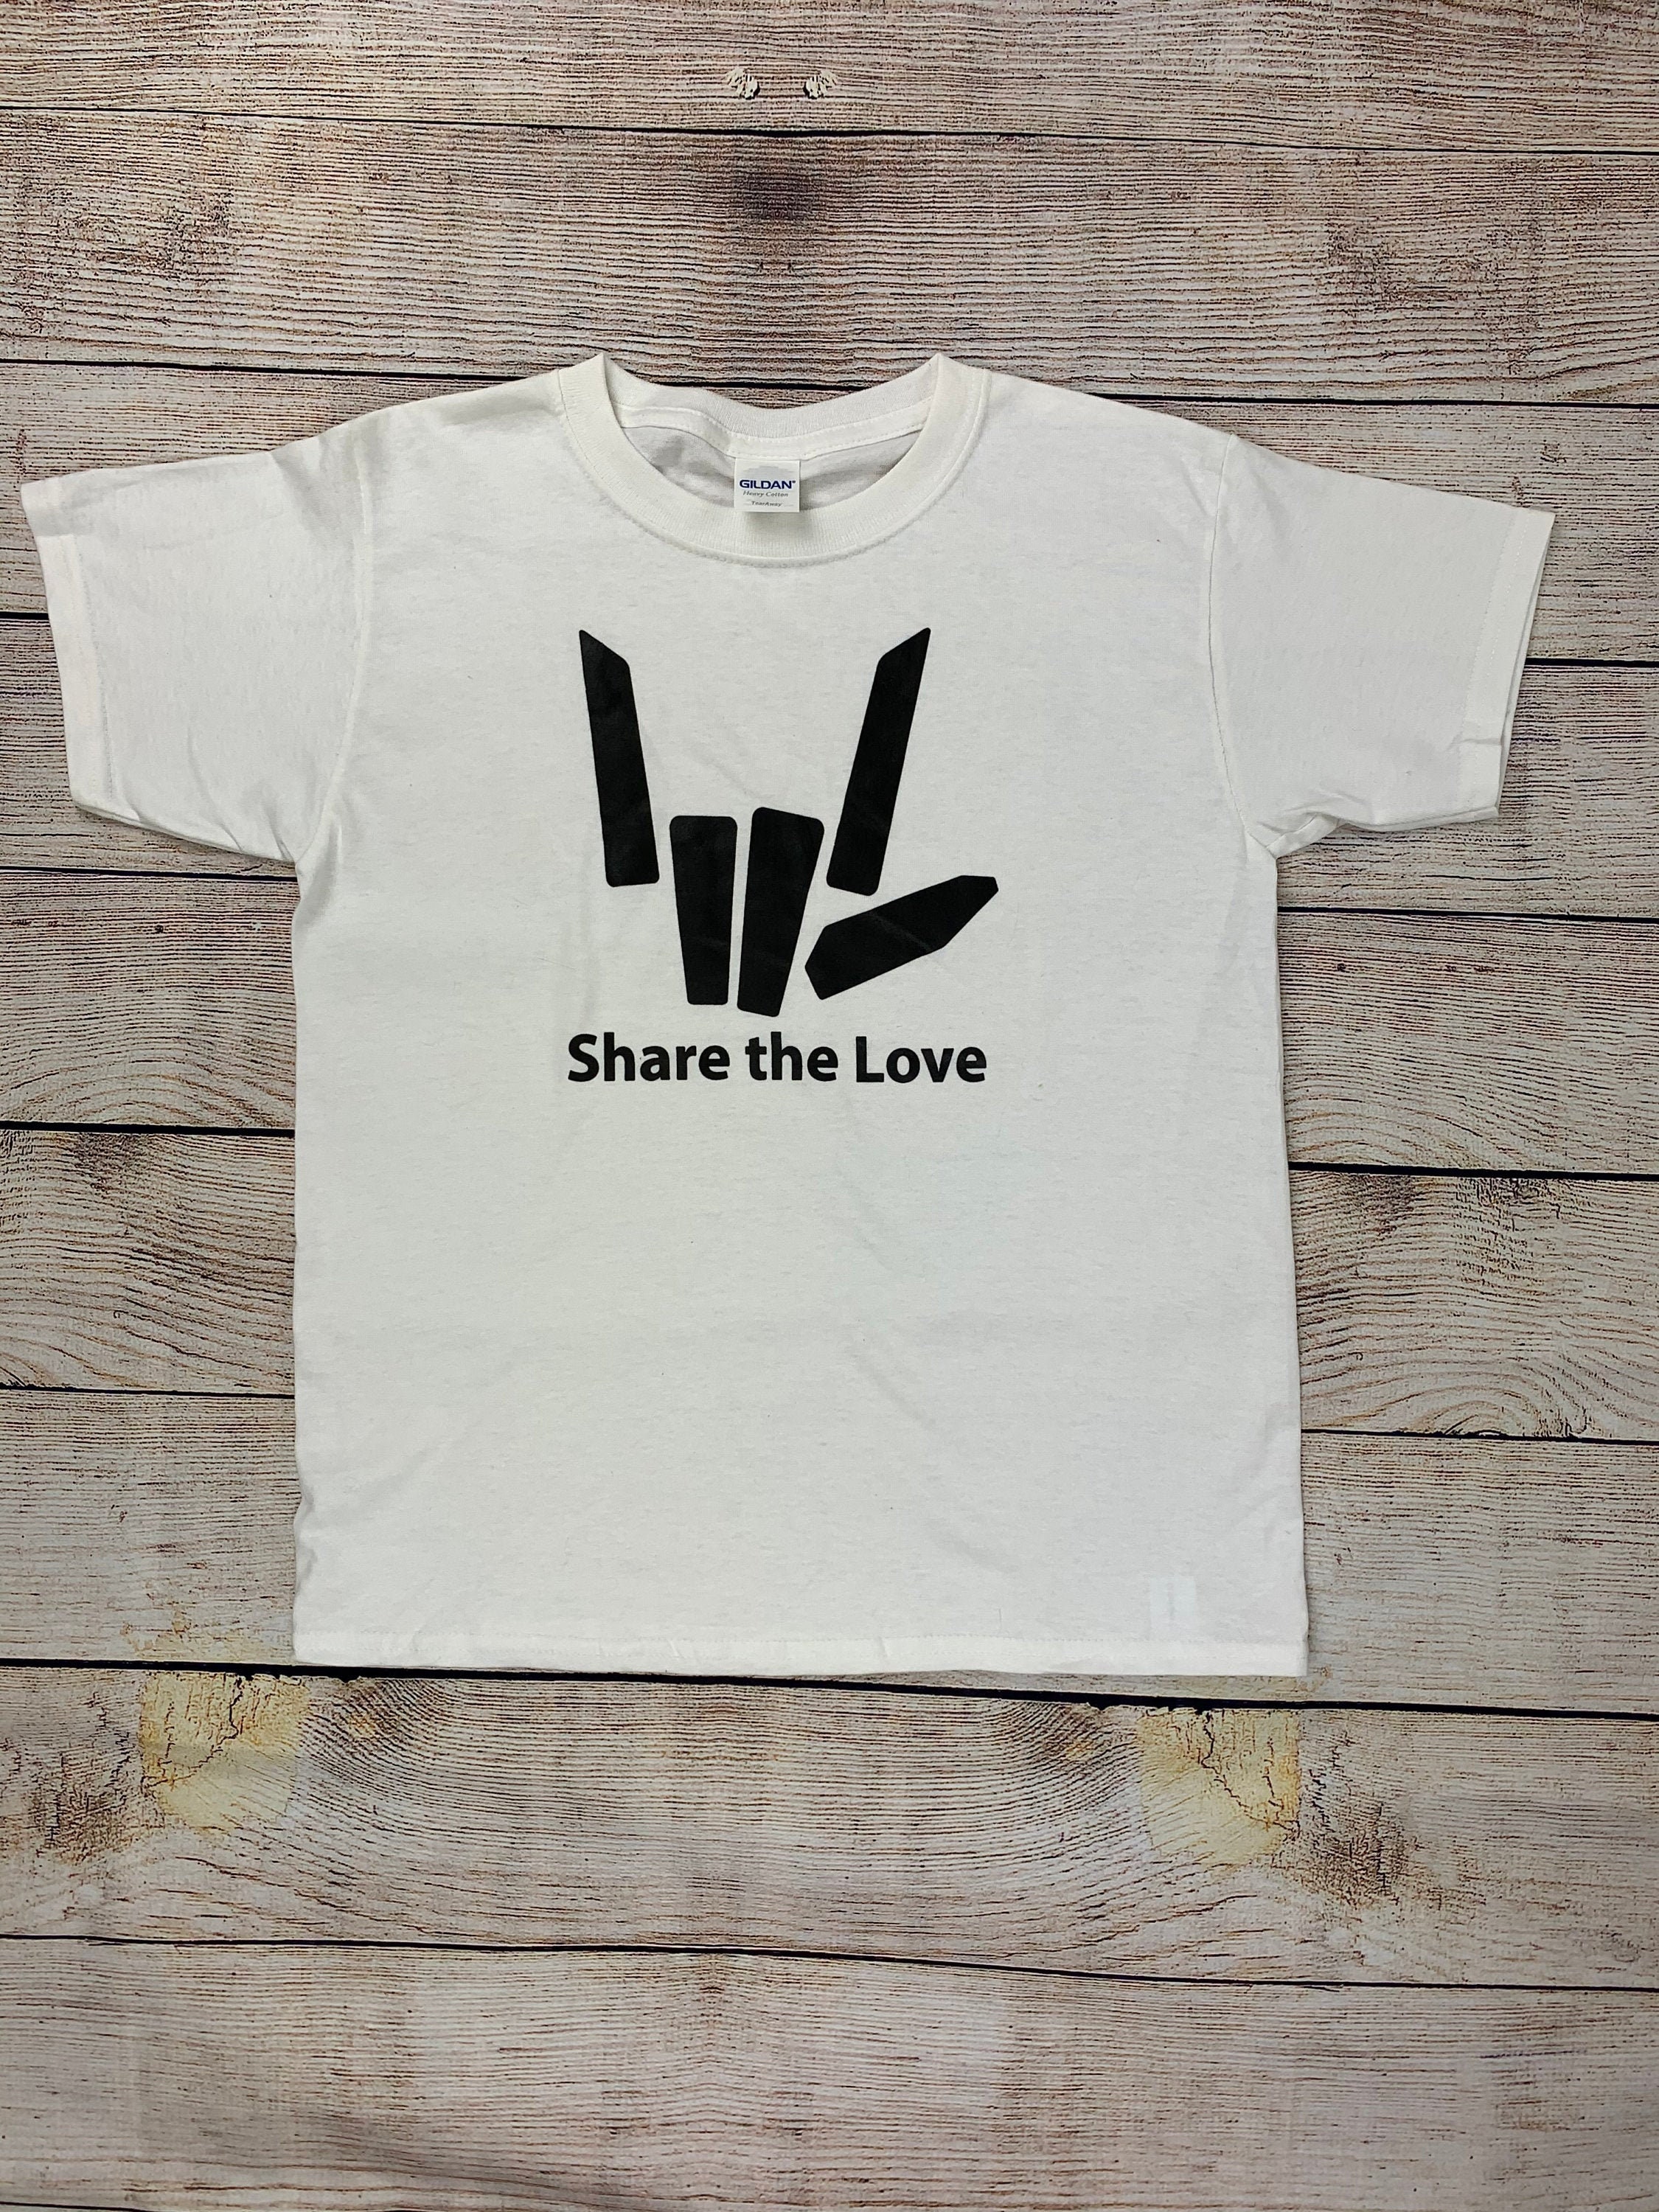 Share The Love Unisex Youths Short Sleeve T-Shirt Kids T-Shirt Tops Gray